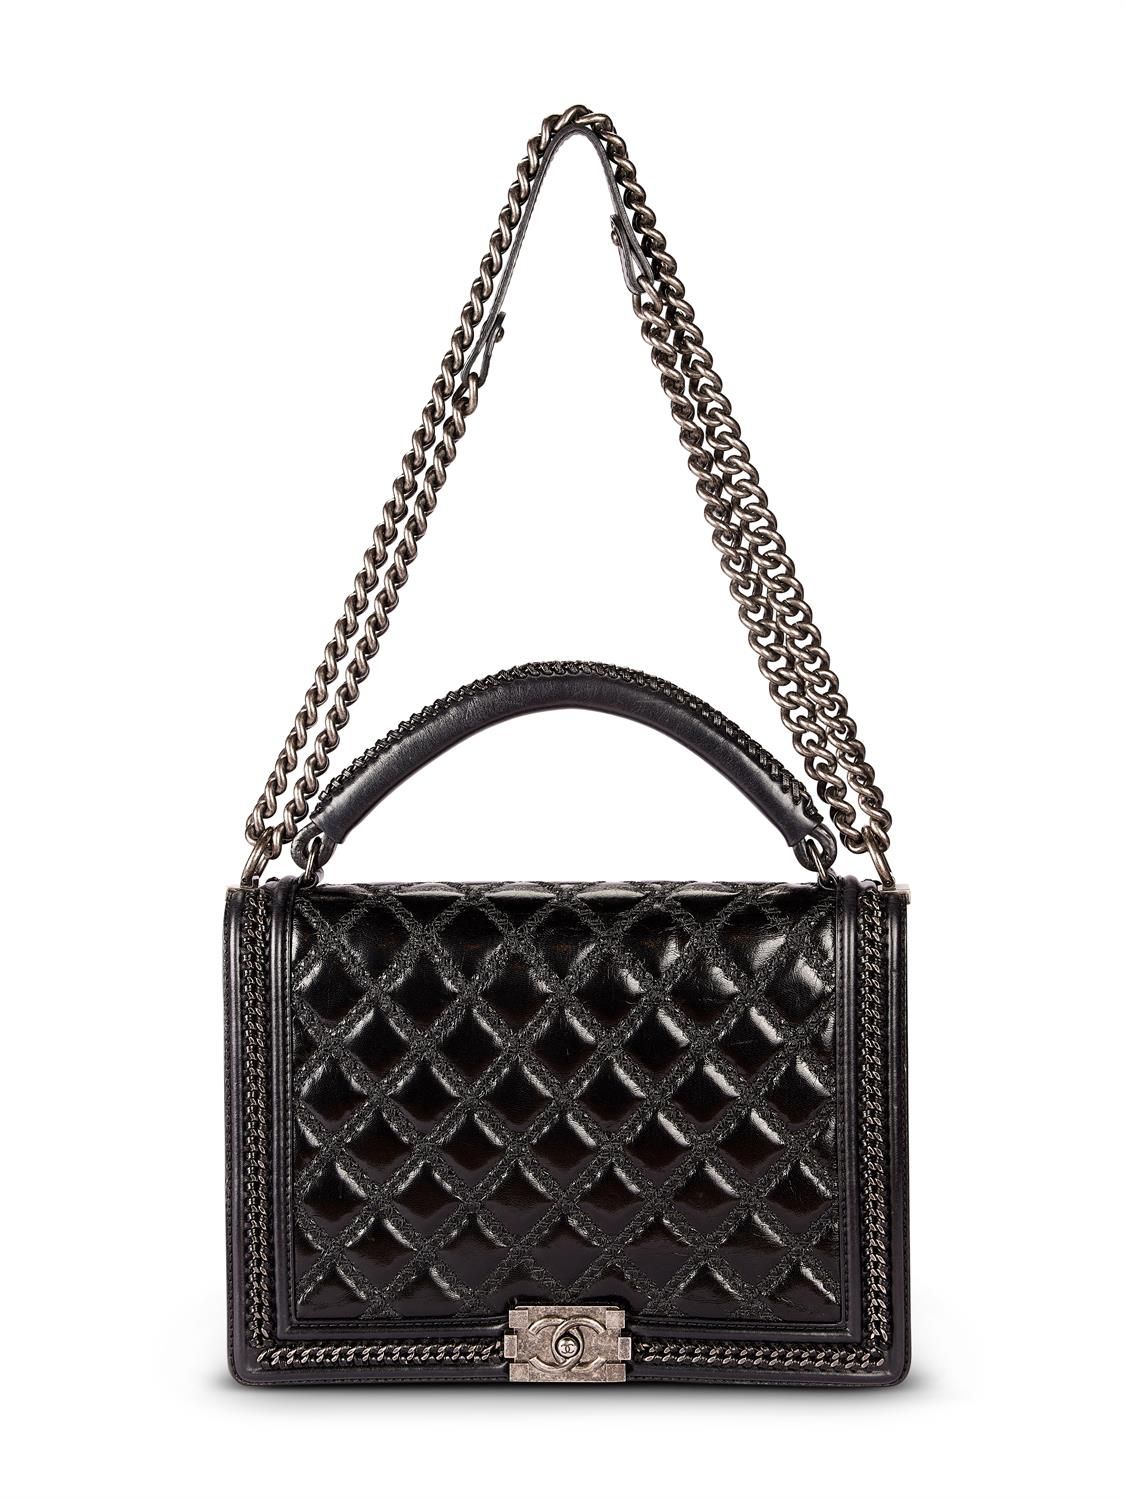 Chanel, Boy, a black calfskin quilted leather shoulder bag Chanel, Boy, un sac à&hellip;